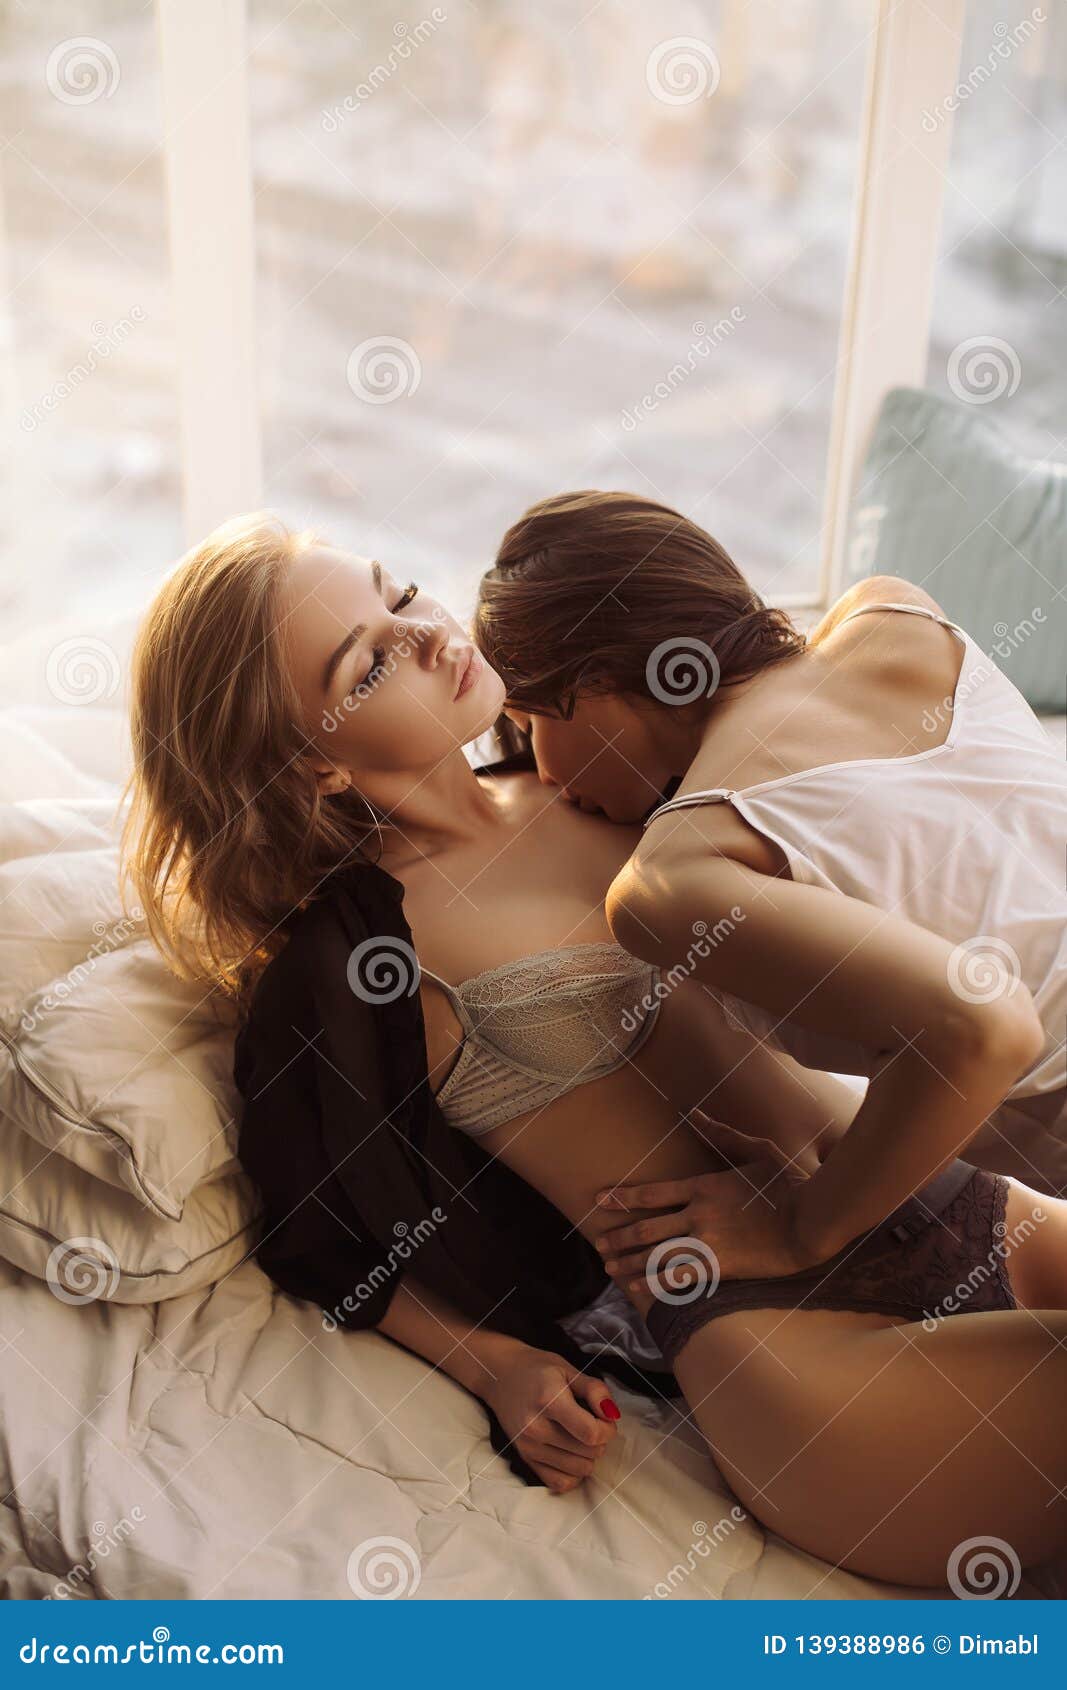 Seductive erotic lesbian lingerie